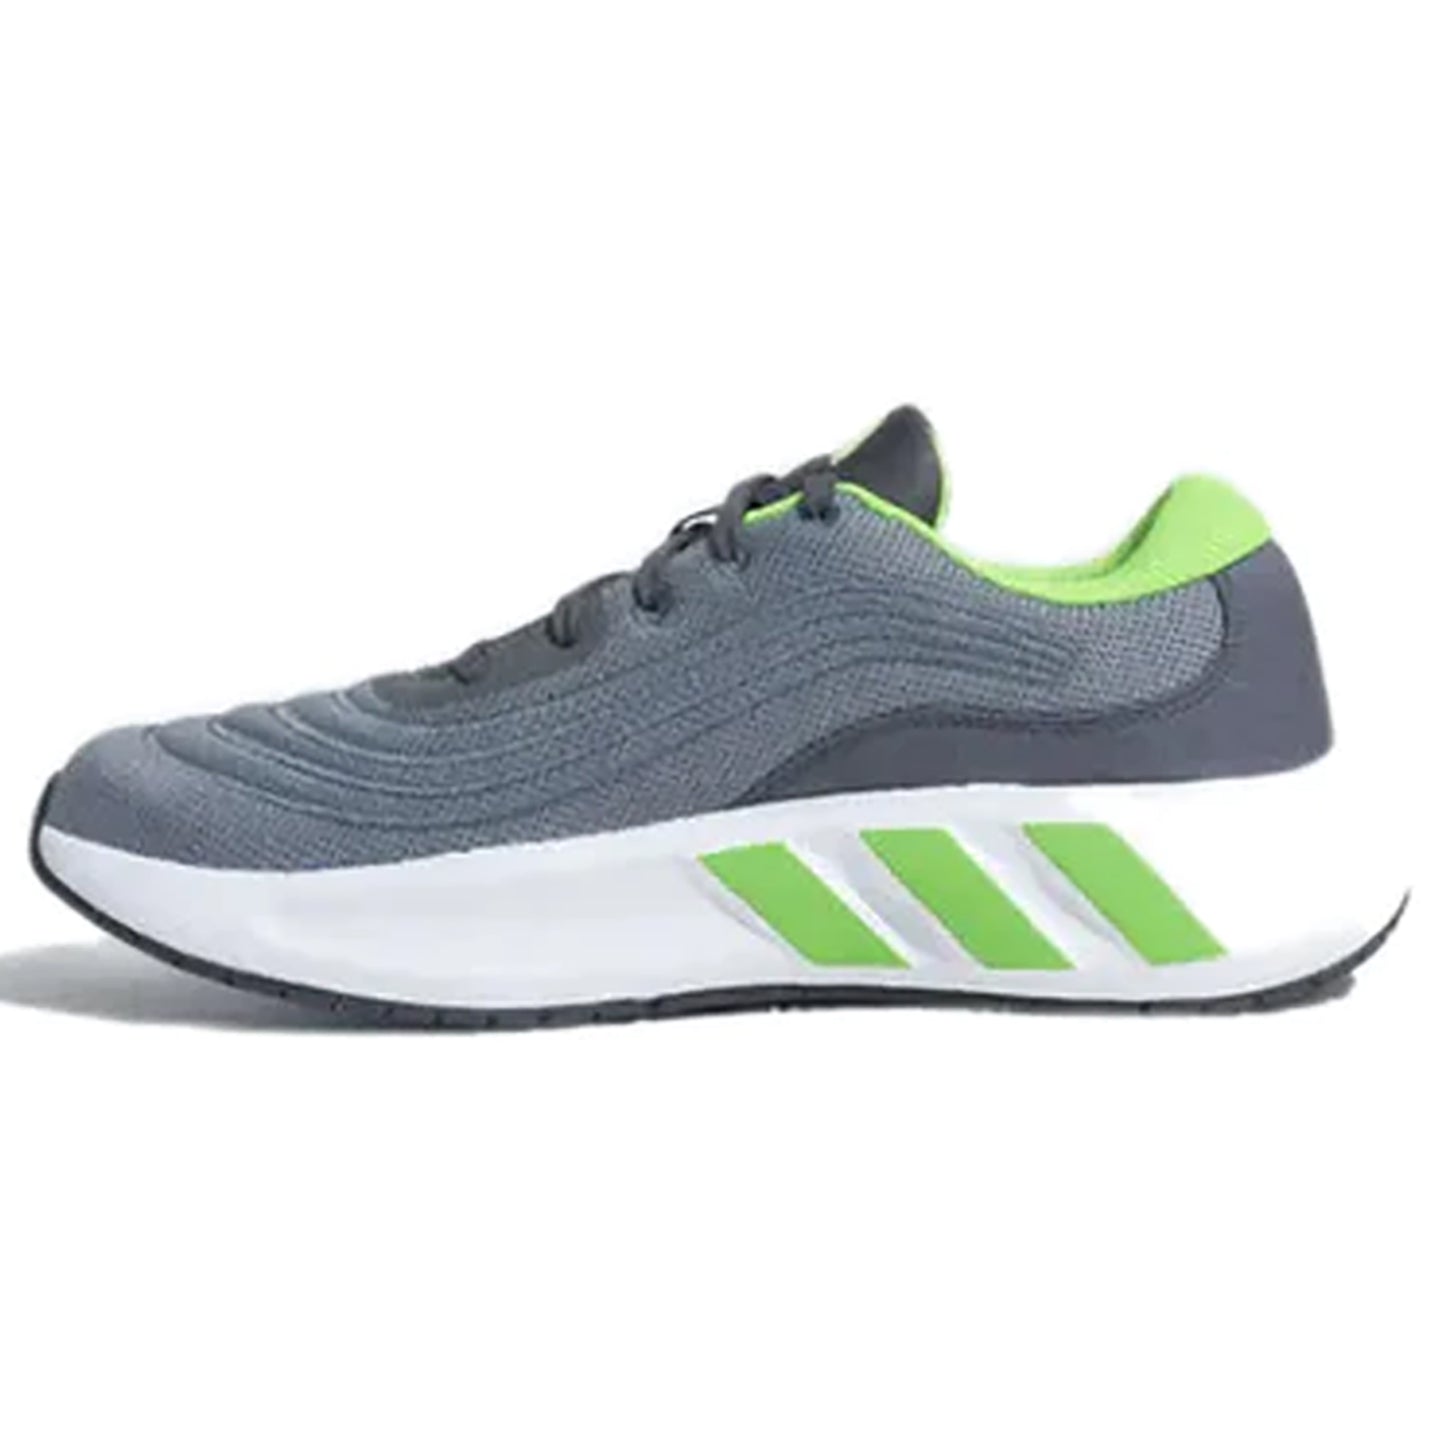 Adidas Men's Cloud Tec Running Shoe, Mlead/Grey six/Lucid Lemon - Best Price online Prokicksports.com